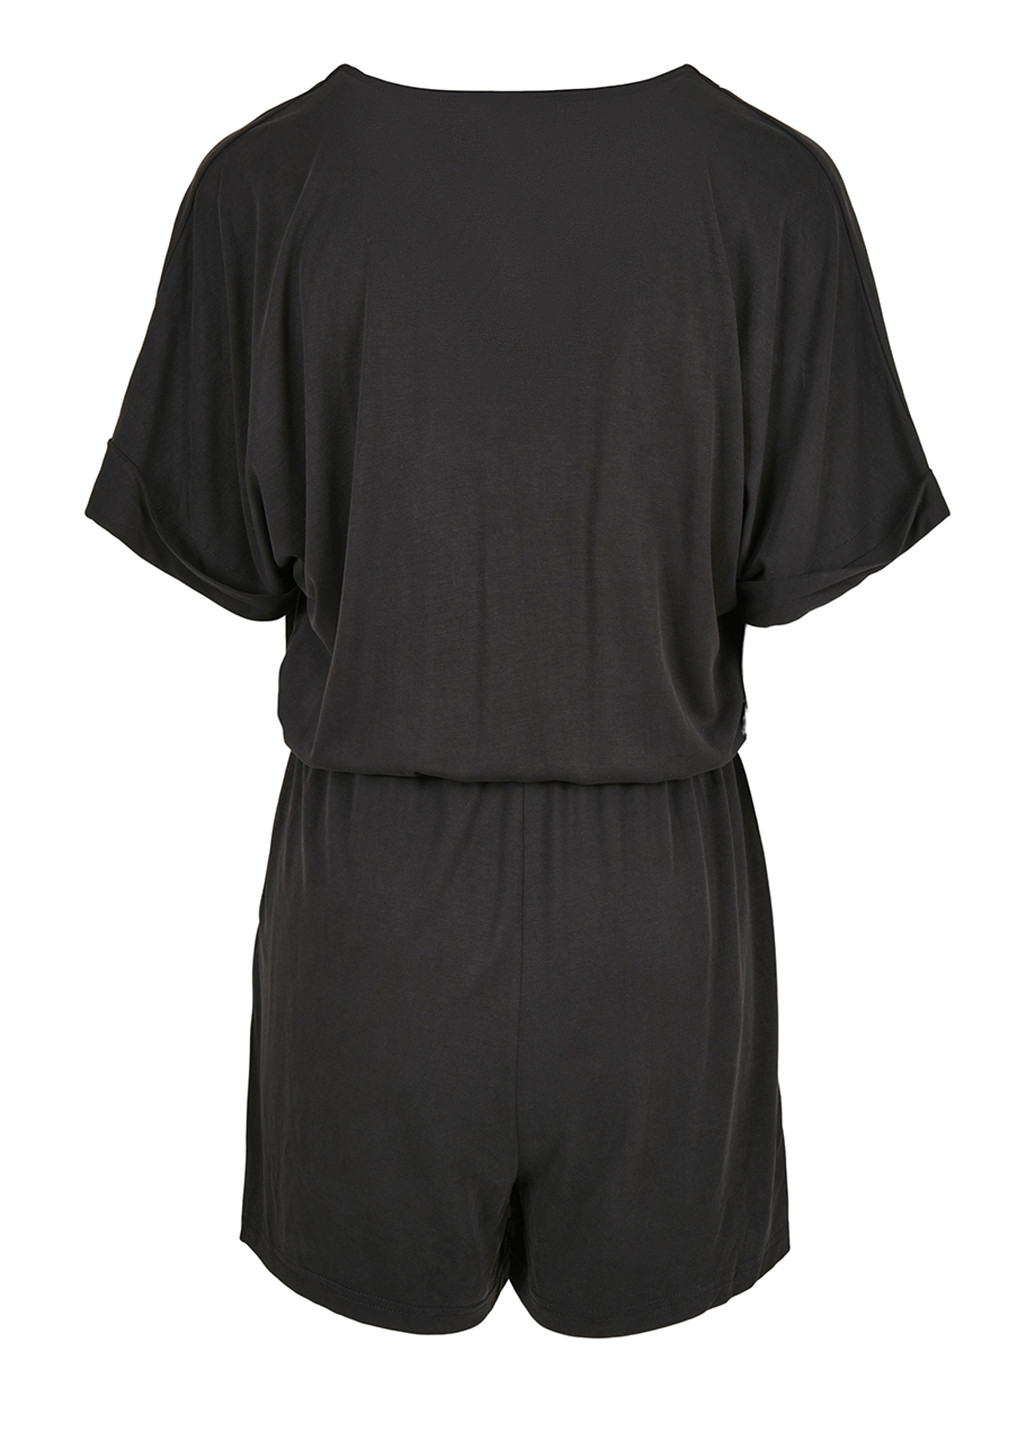 Комбинезон Urban Classics комбинезон-шорты однотонный чёрный кэжуал модал